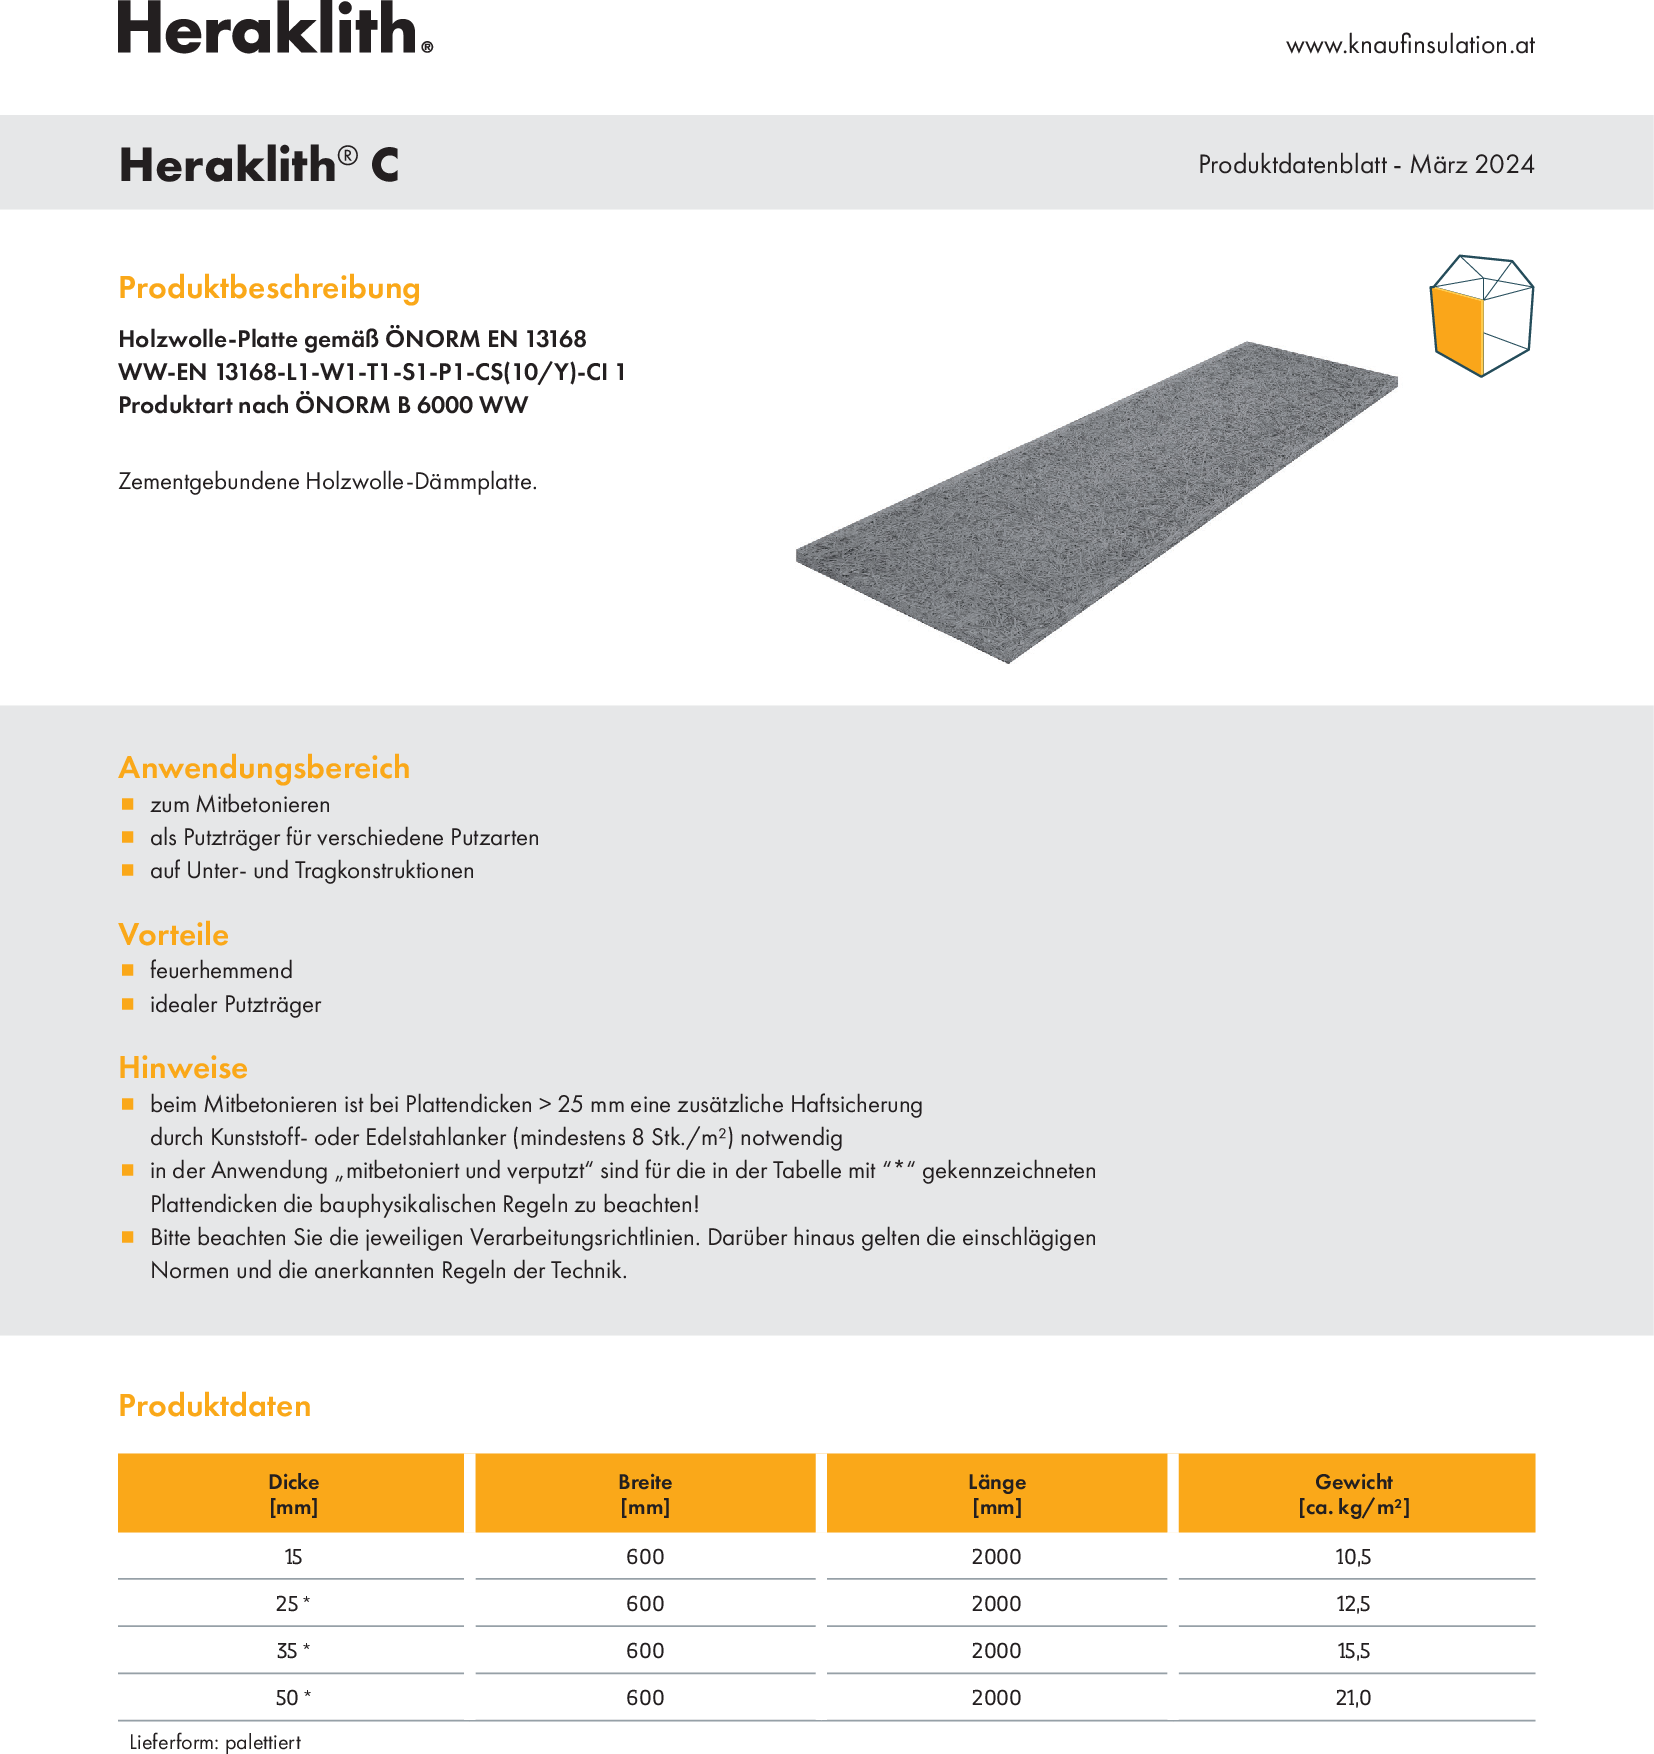 Heraklith C, Produktdatenblatt